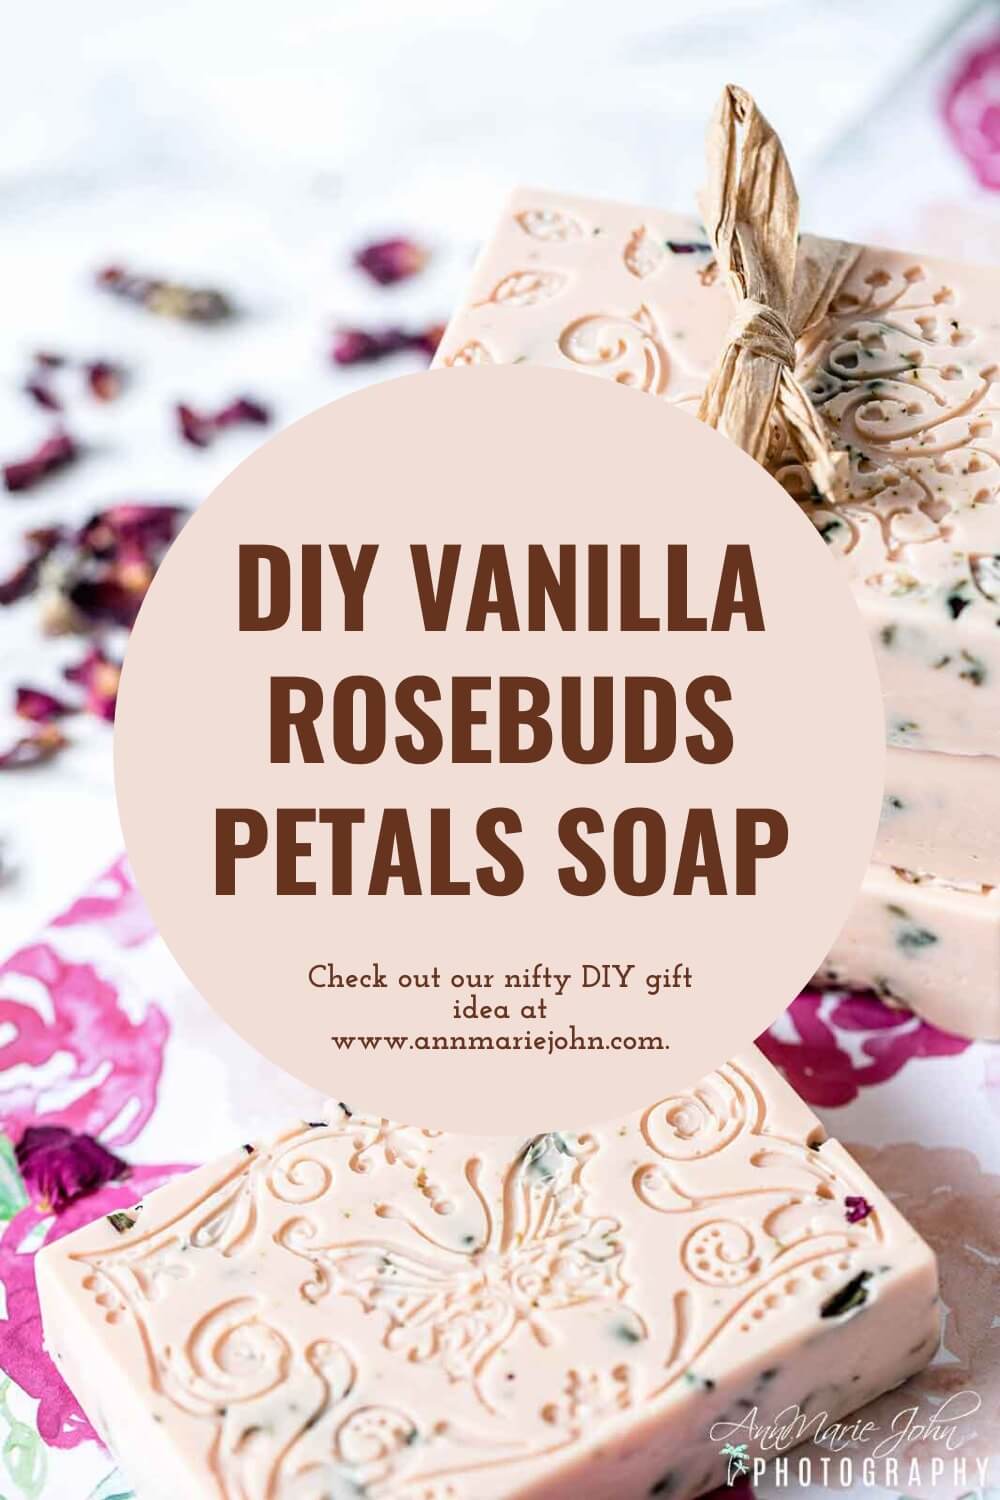 DIY Vanilla Rosebuds Petals Soap Pin 2
